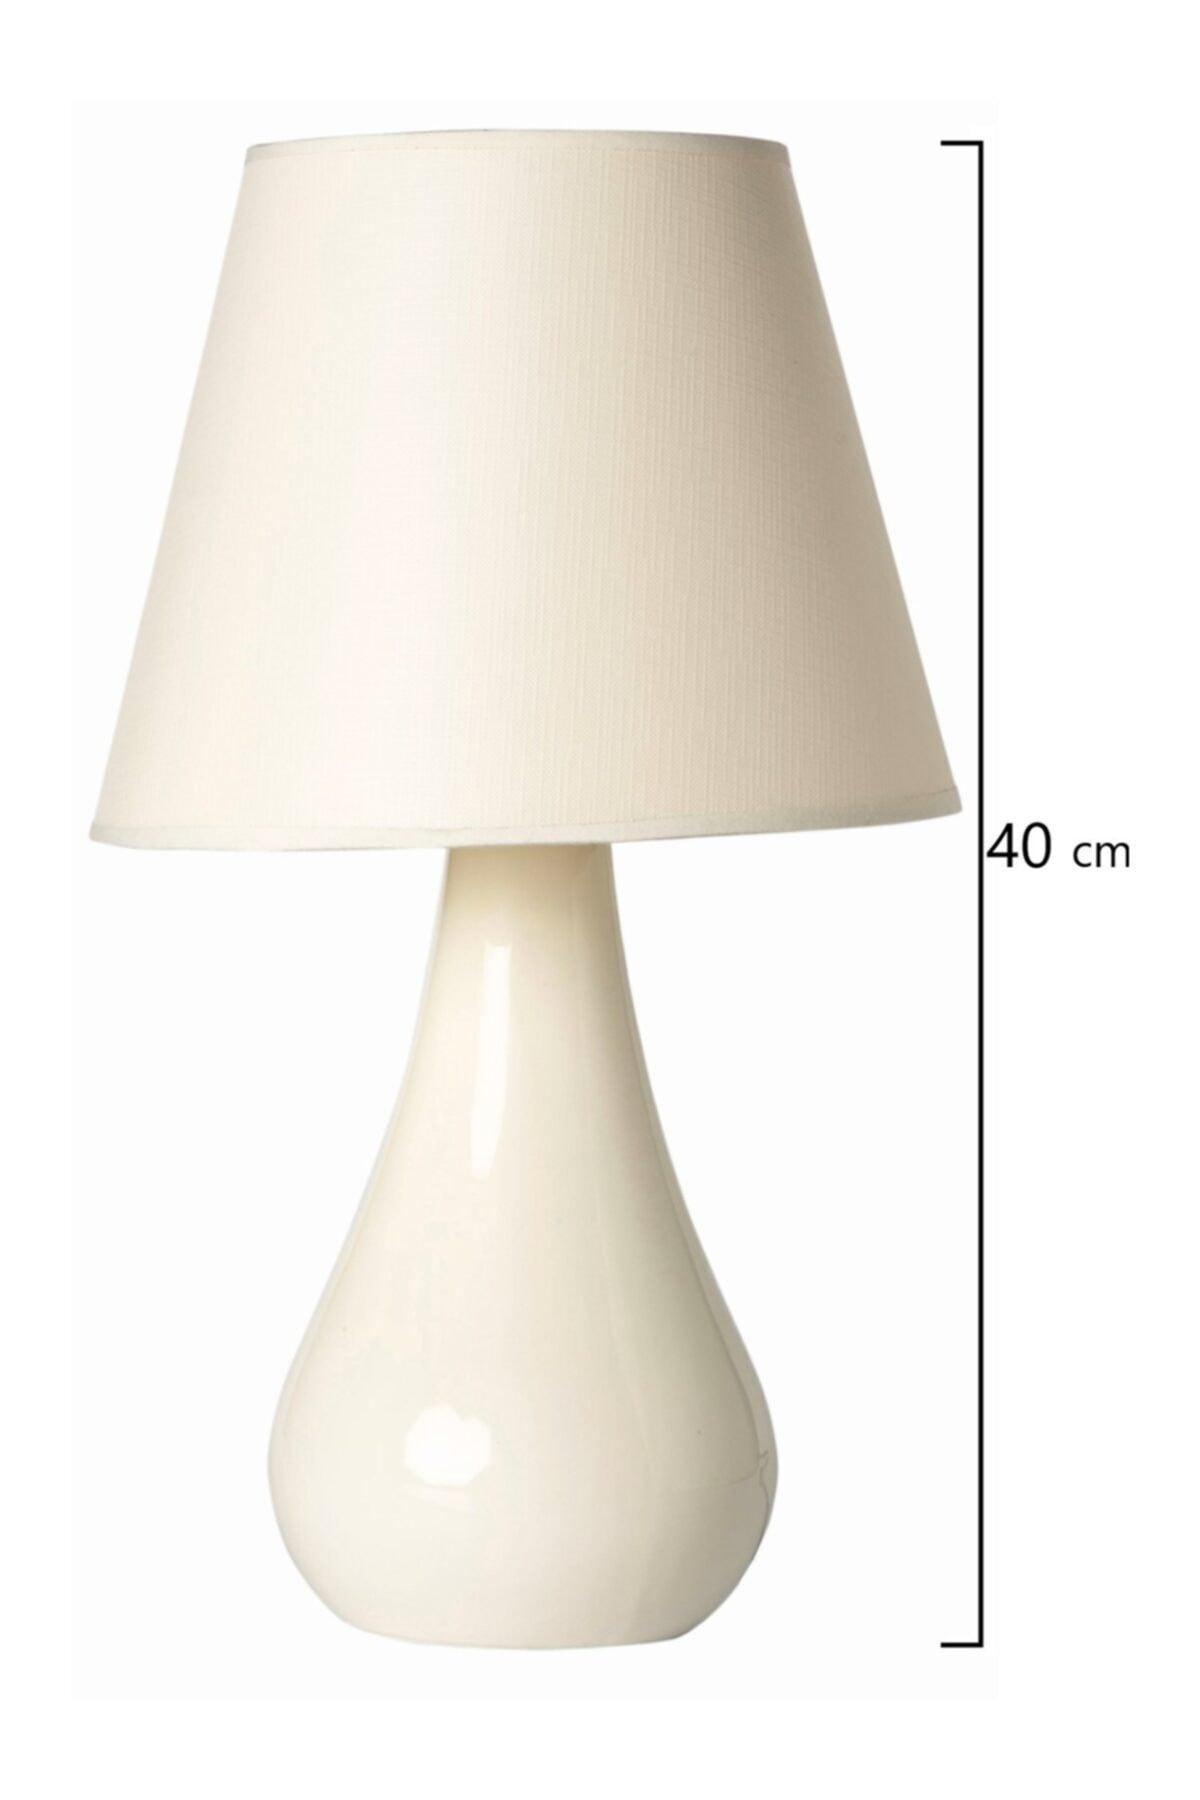 Damla Large Lampshade Ceramic - White / Cream Tile - Swordslife